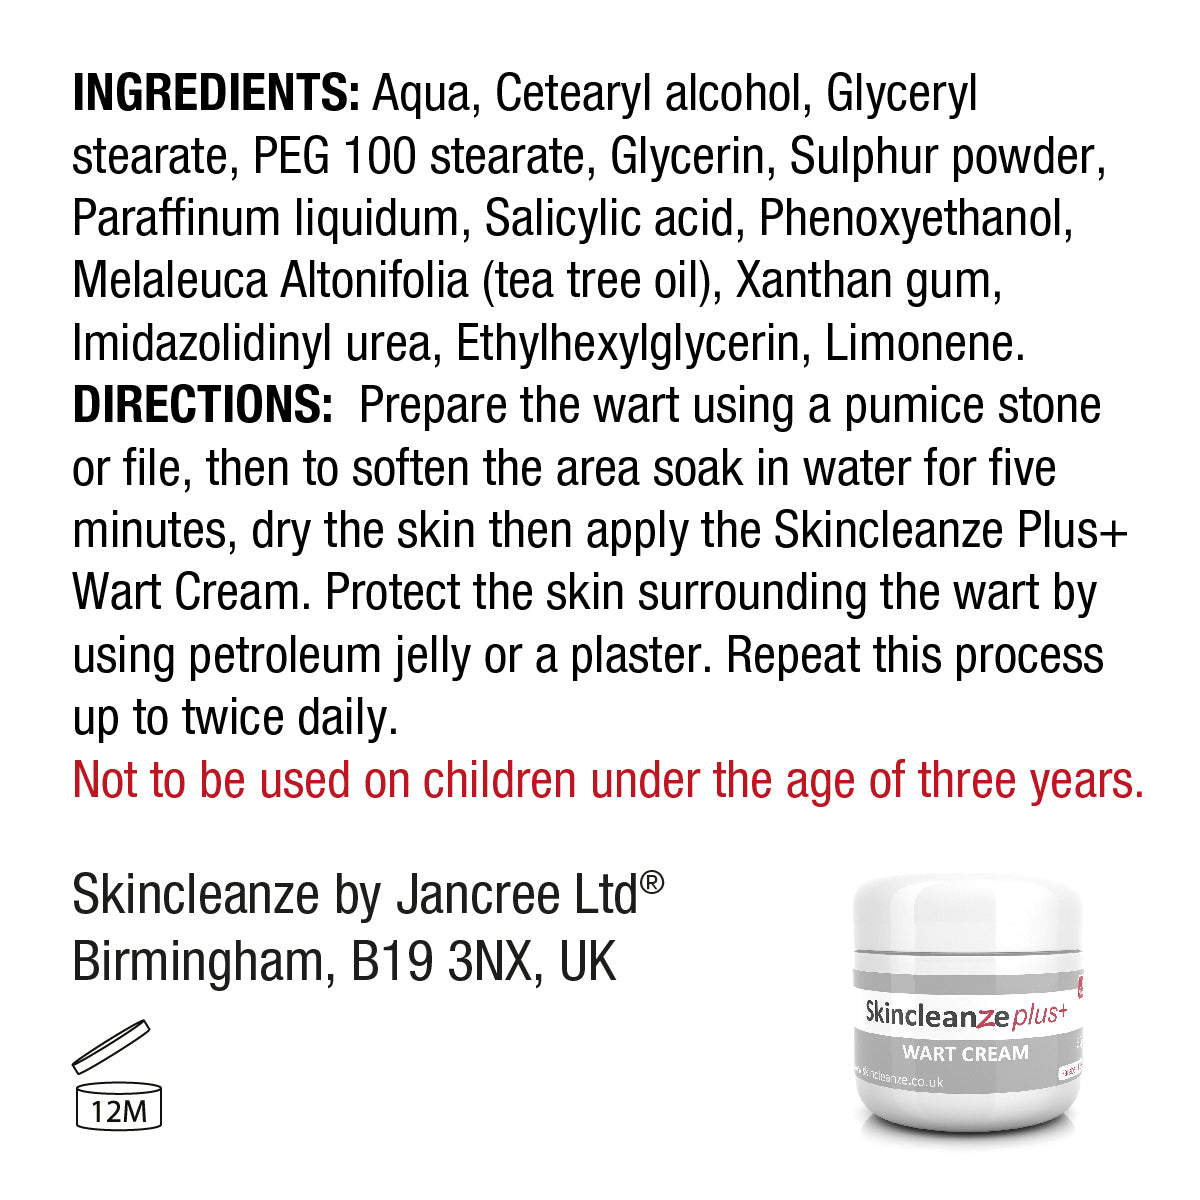 Skincleanze plus+ Wart & Verruca Cream Double Strength (Pack of 2x 50g)